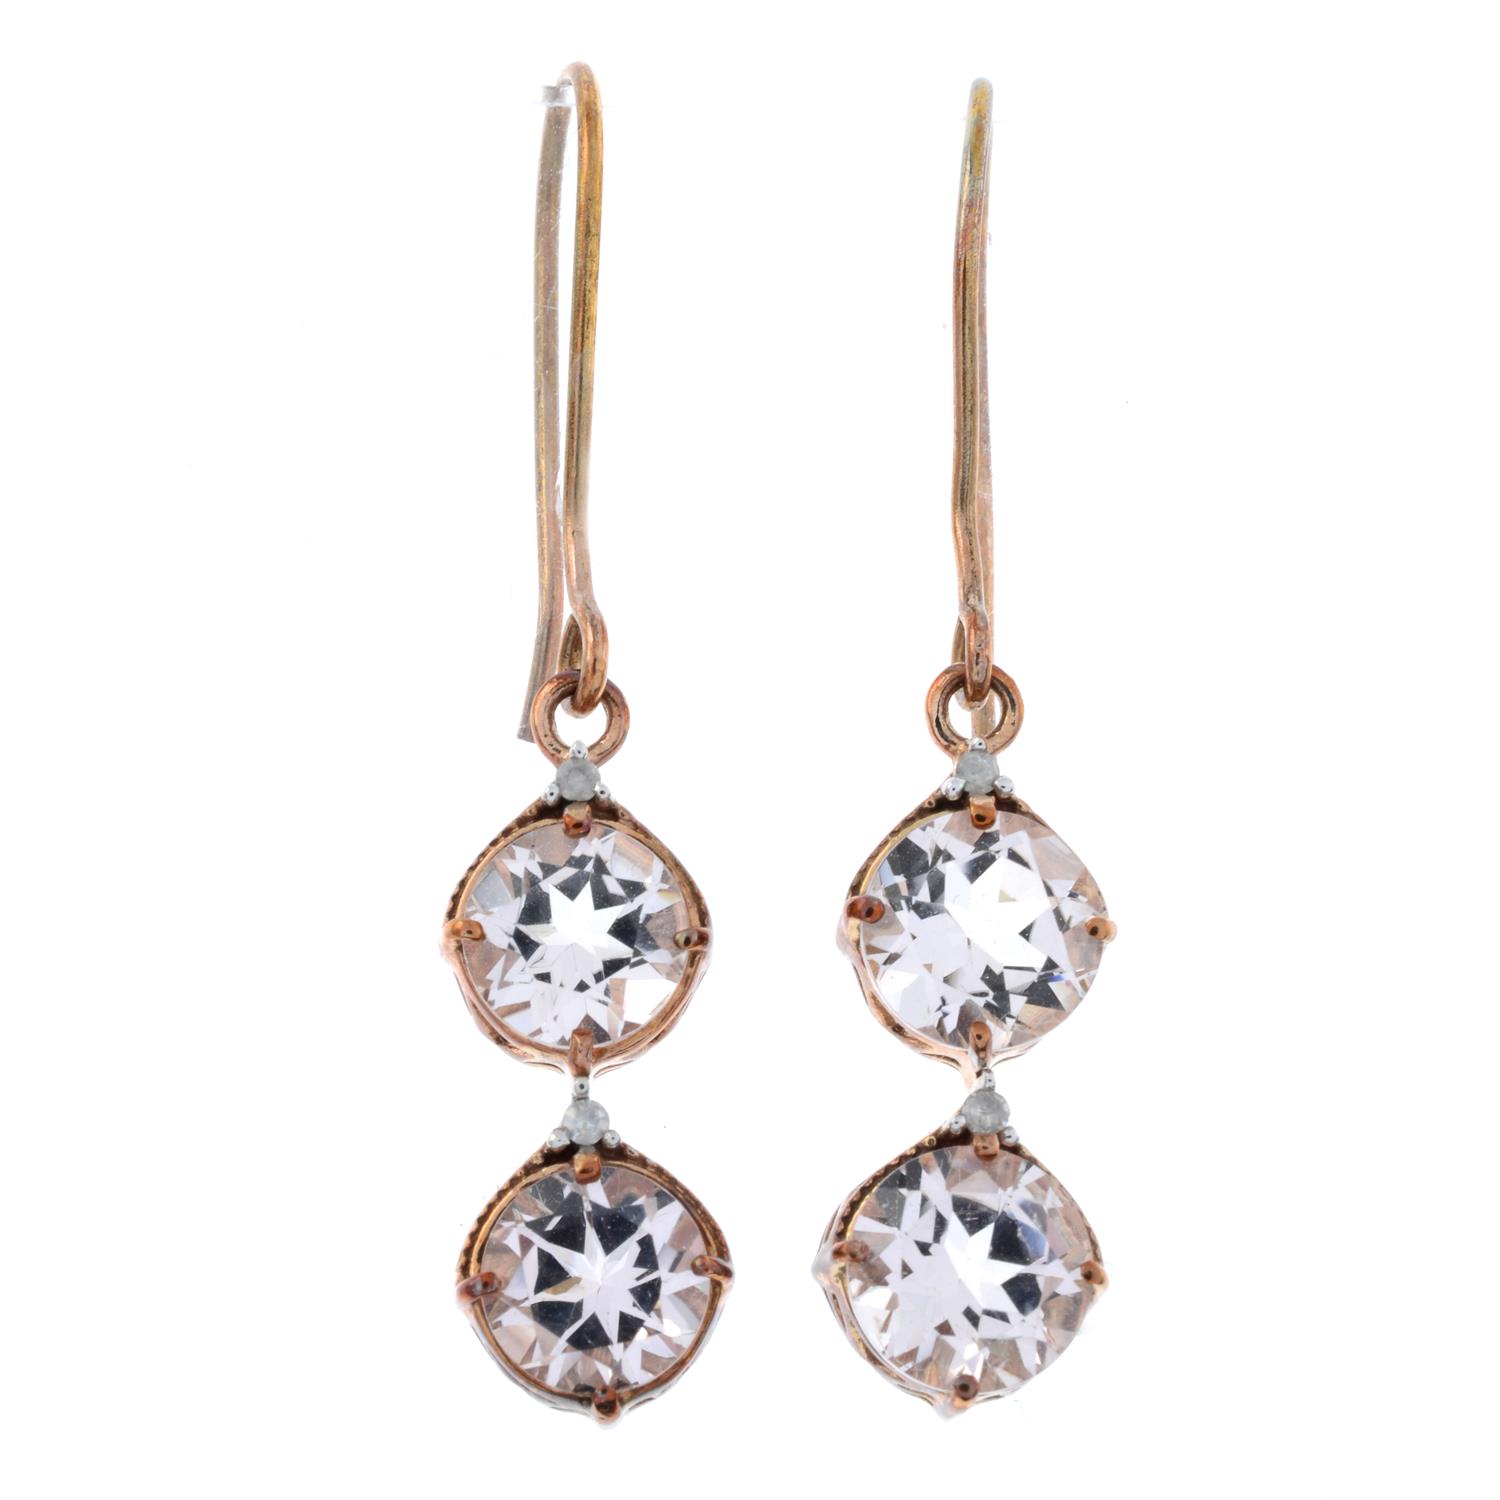 Morganite & diamond earrings